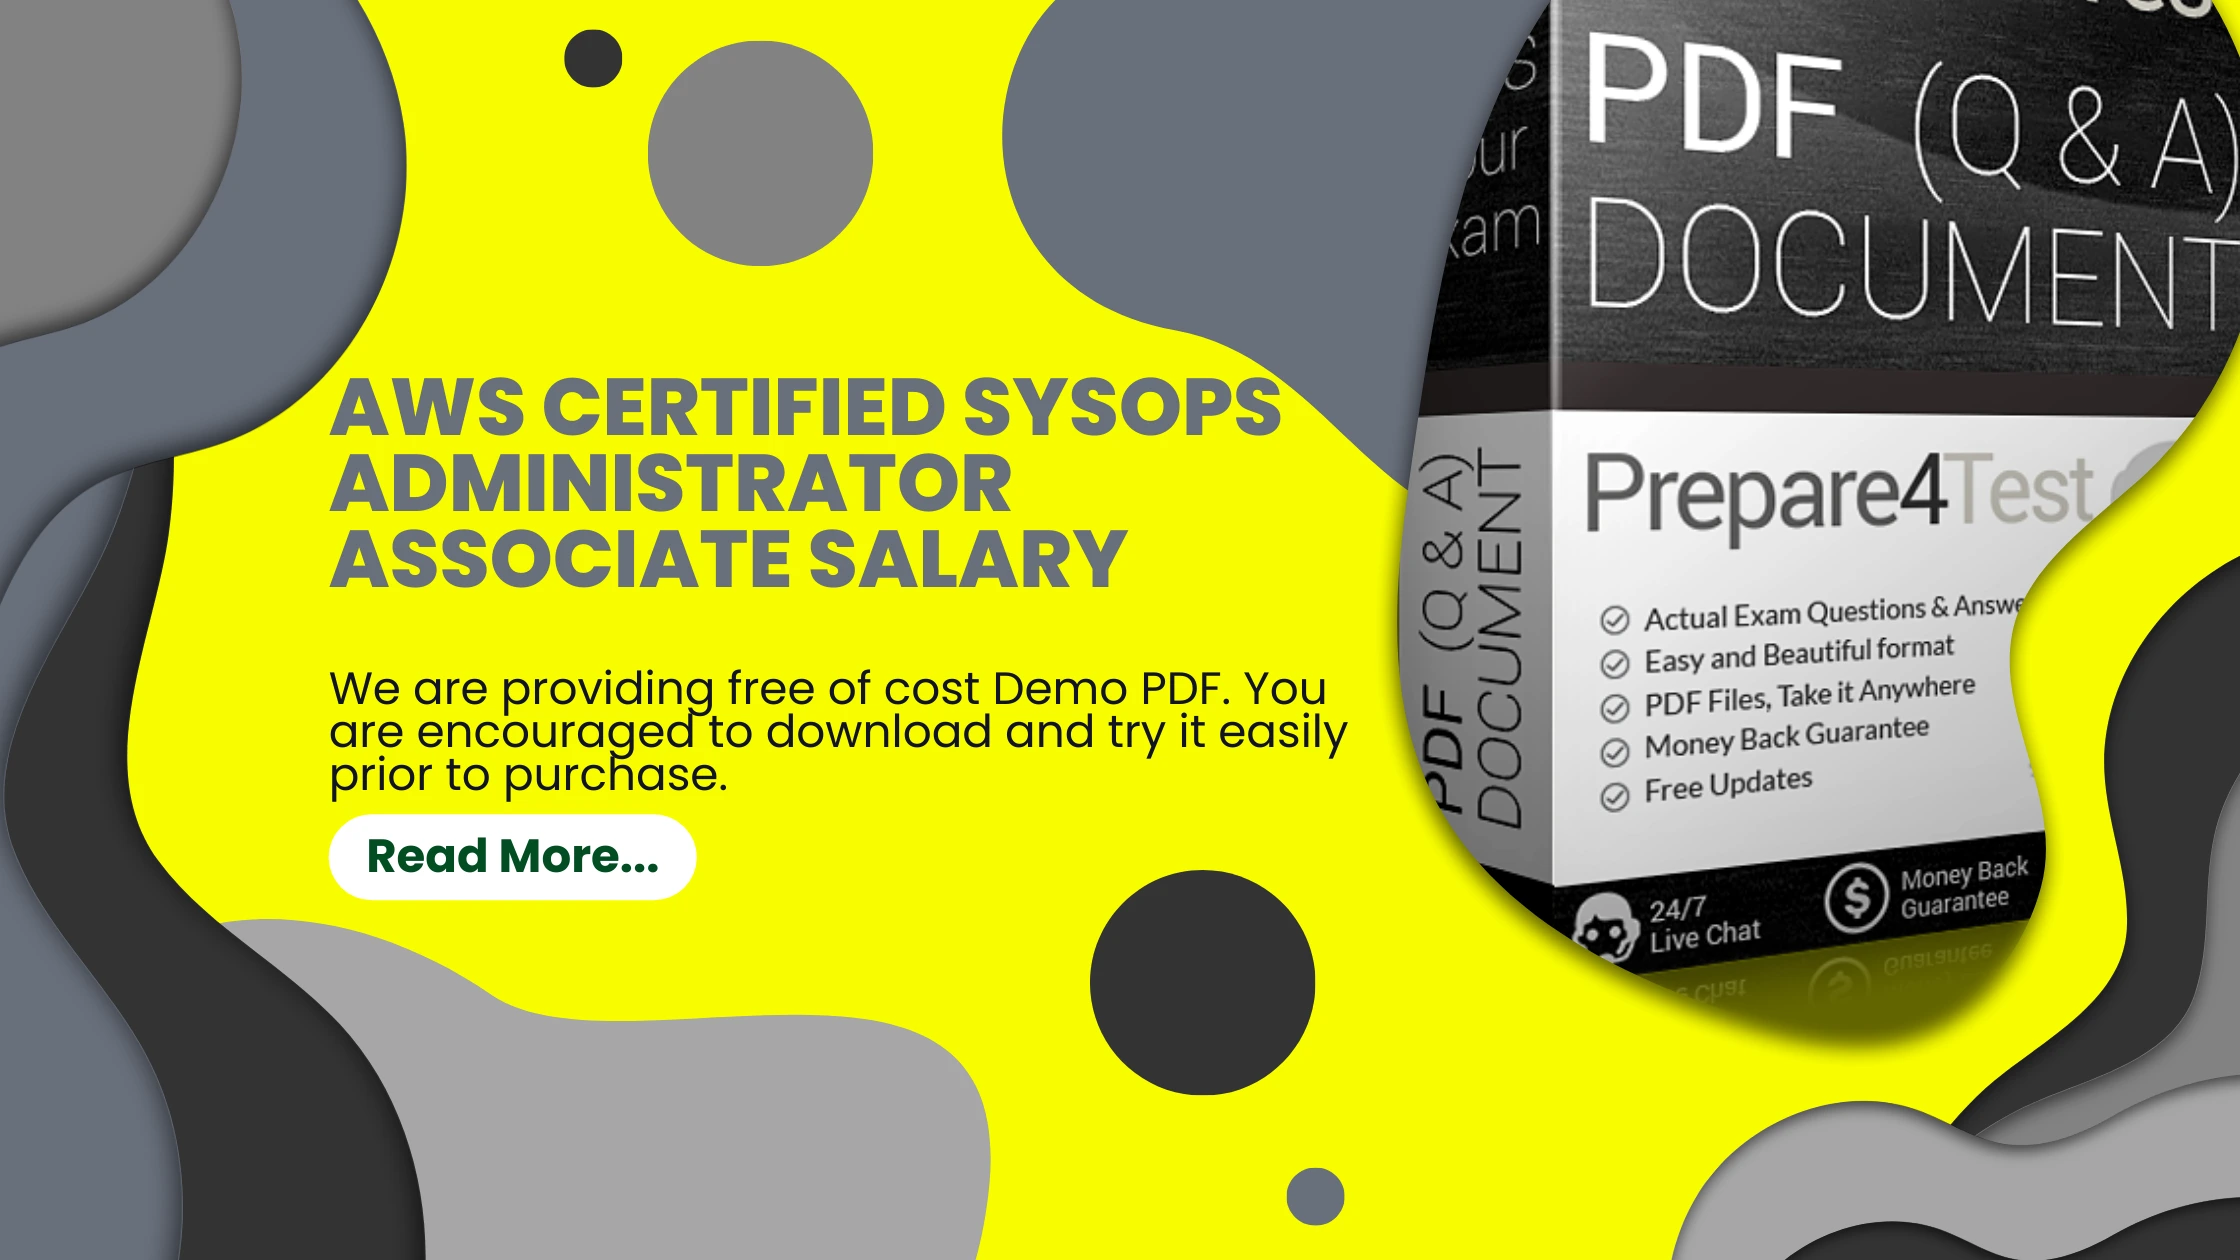 AWS Certified SysOps Administrator Associate Salary guarantee